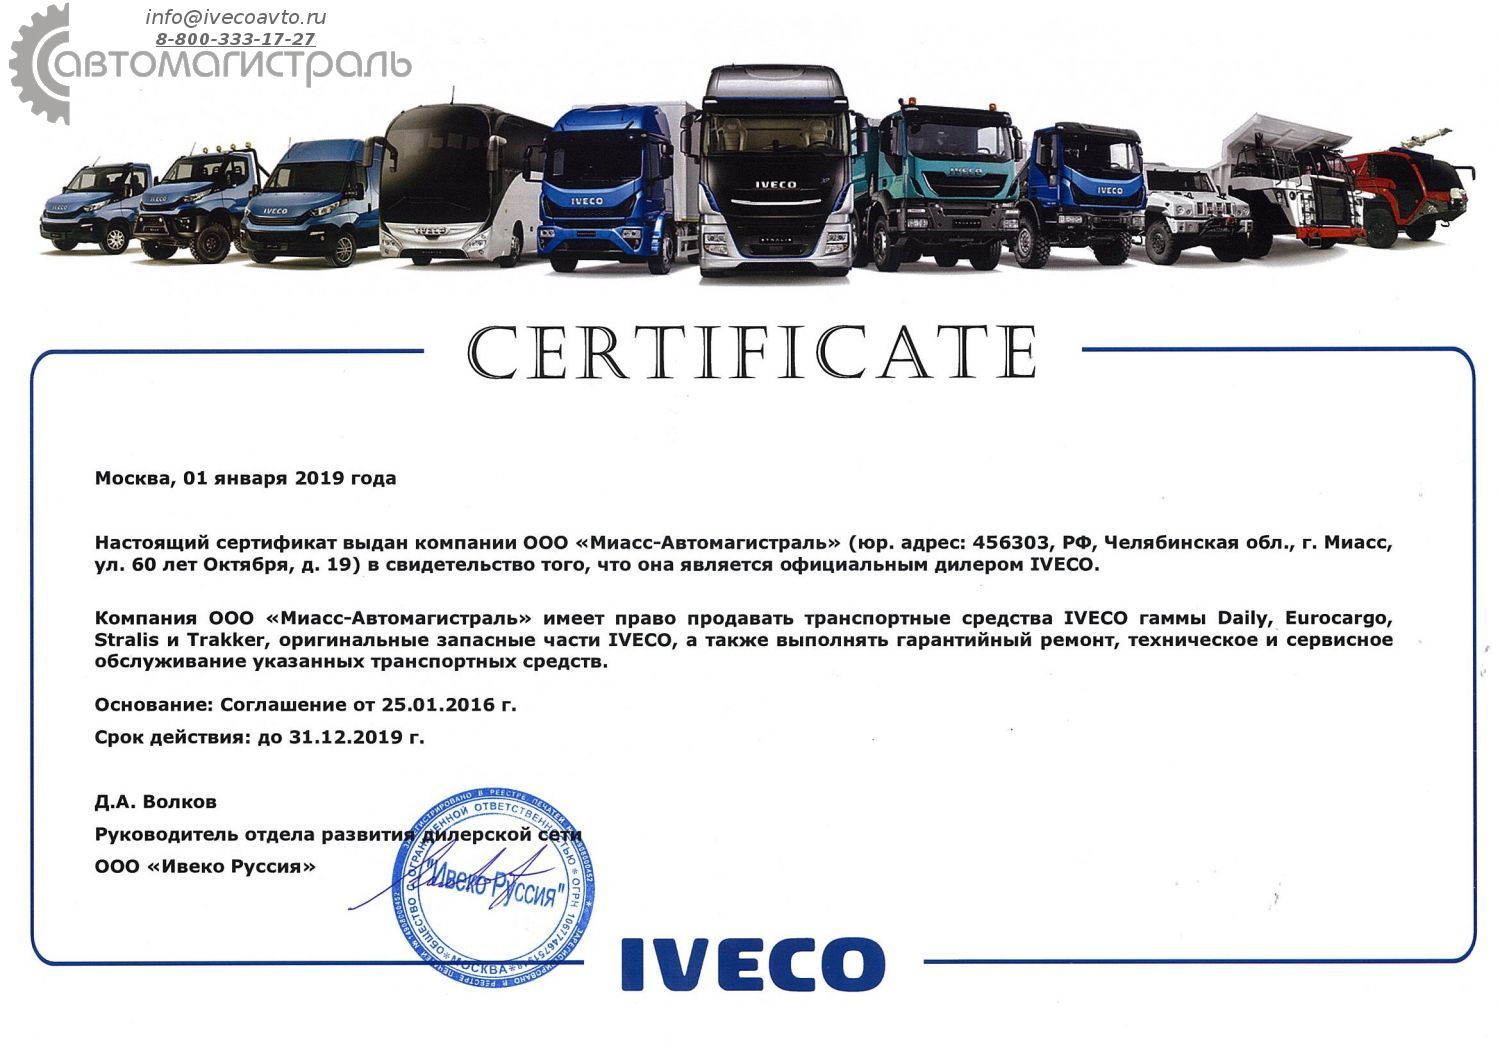 Обновление сертификата IVECO на 2019 год